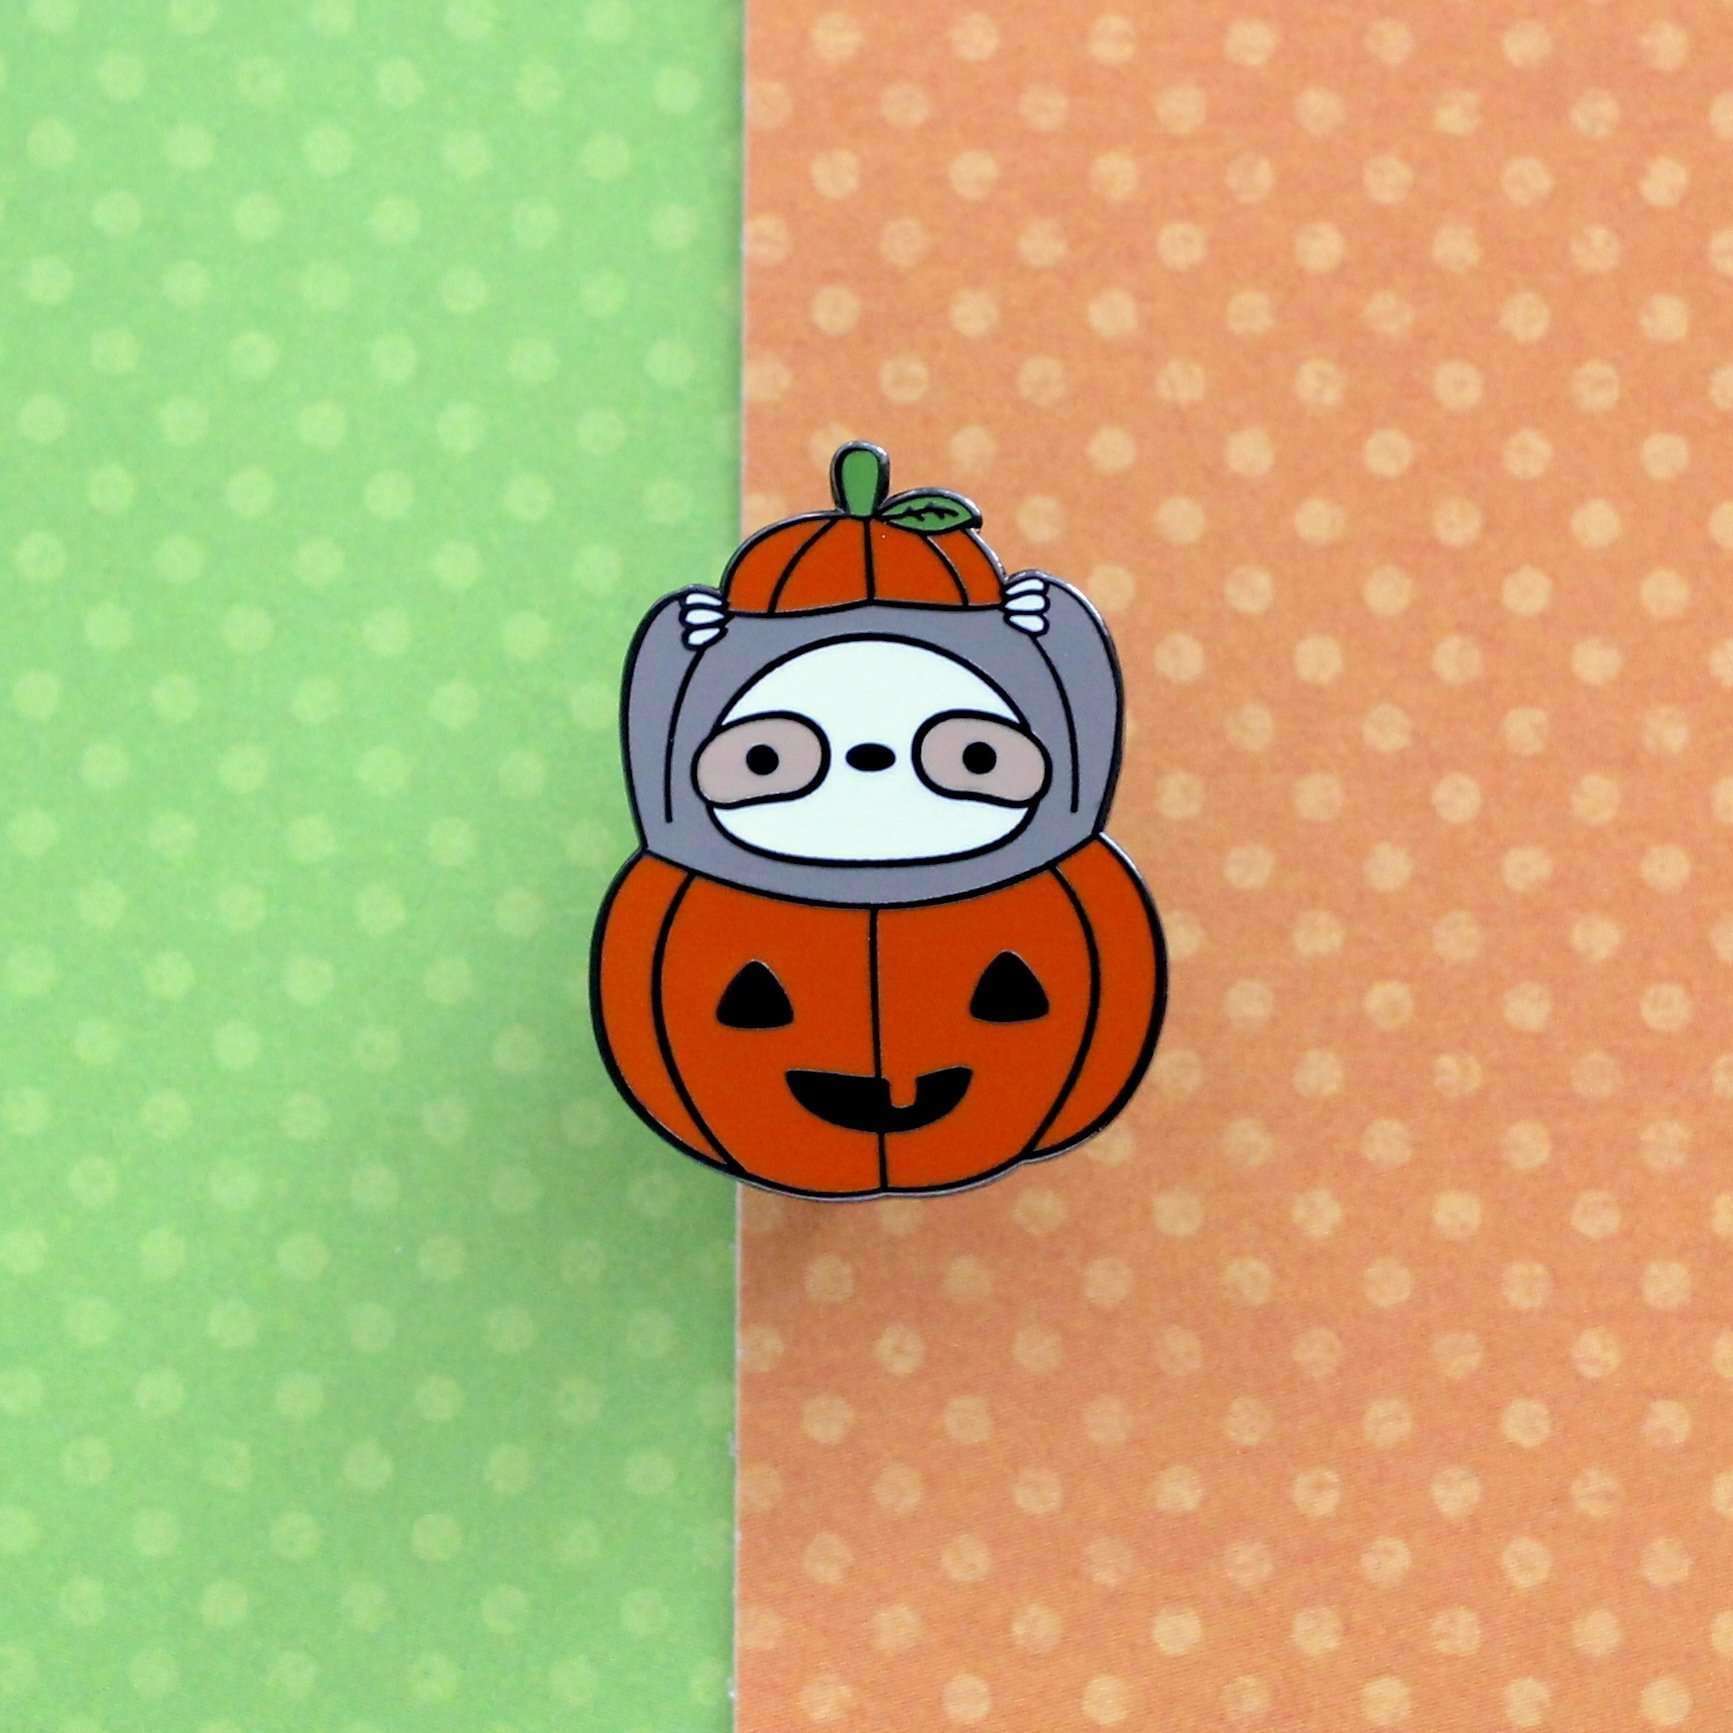 Pumpkin Sloth Enamel Pin - Sloth Gift - Cute Pin - Halloween Pin by Wild Whimsy Woolies